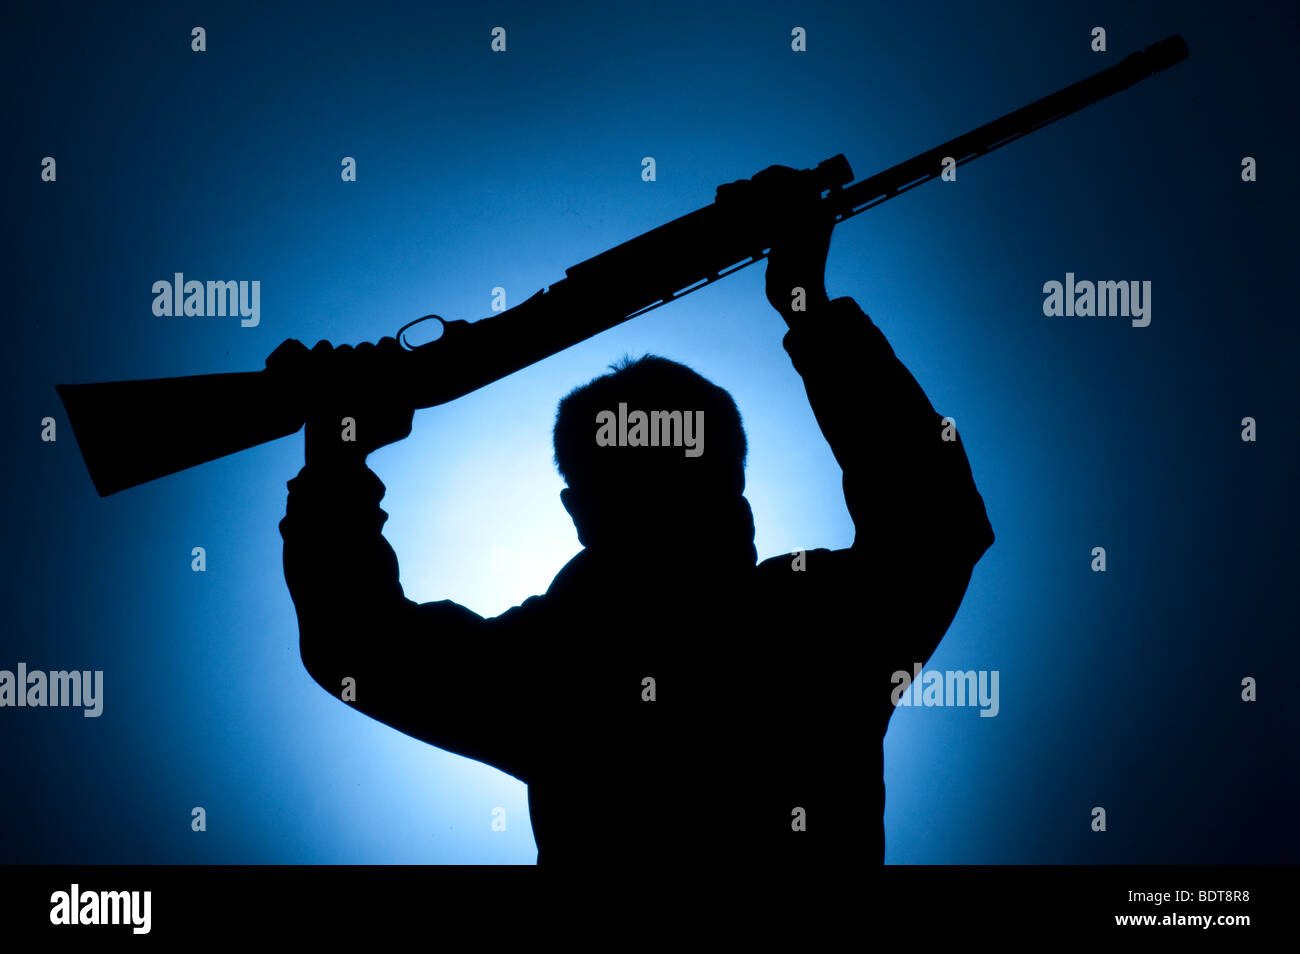 male terrorist wearing mask charging with large shotgun Stock Photo